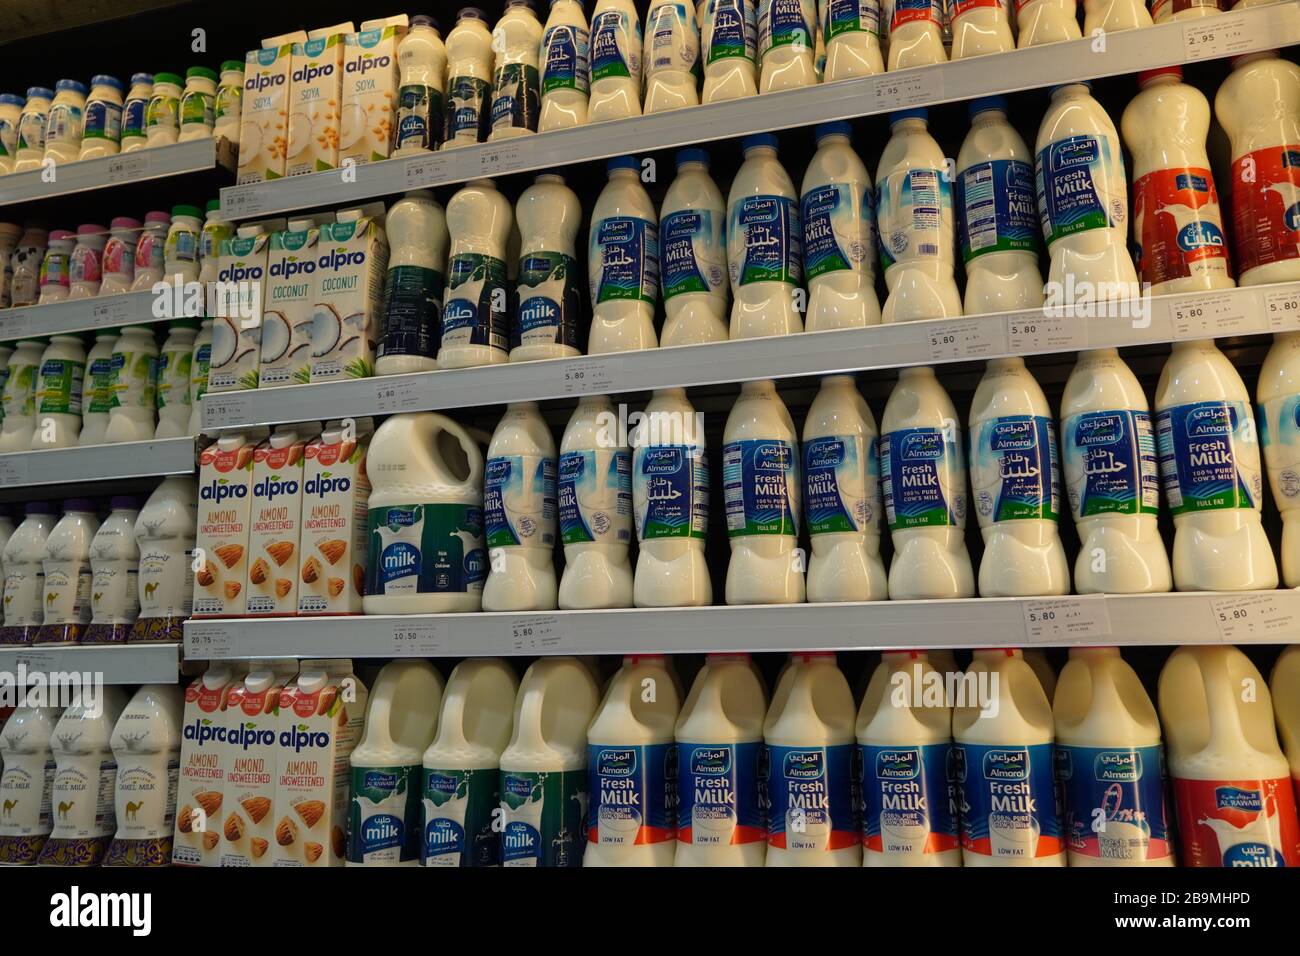 https://c8.alamy.com/comp/2B9MHPD/dubai-uae-december-2019-milk-bottles-arranged-on-shelves-for-sale-variety-of-sizes-also-present-flavored-milk-strawberry-milk-camel-milk-coconut-m-2B9MHPD.jpg